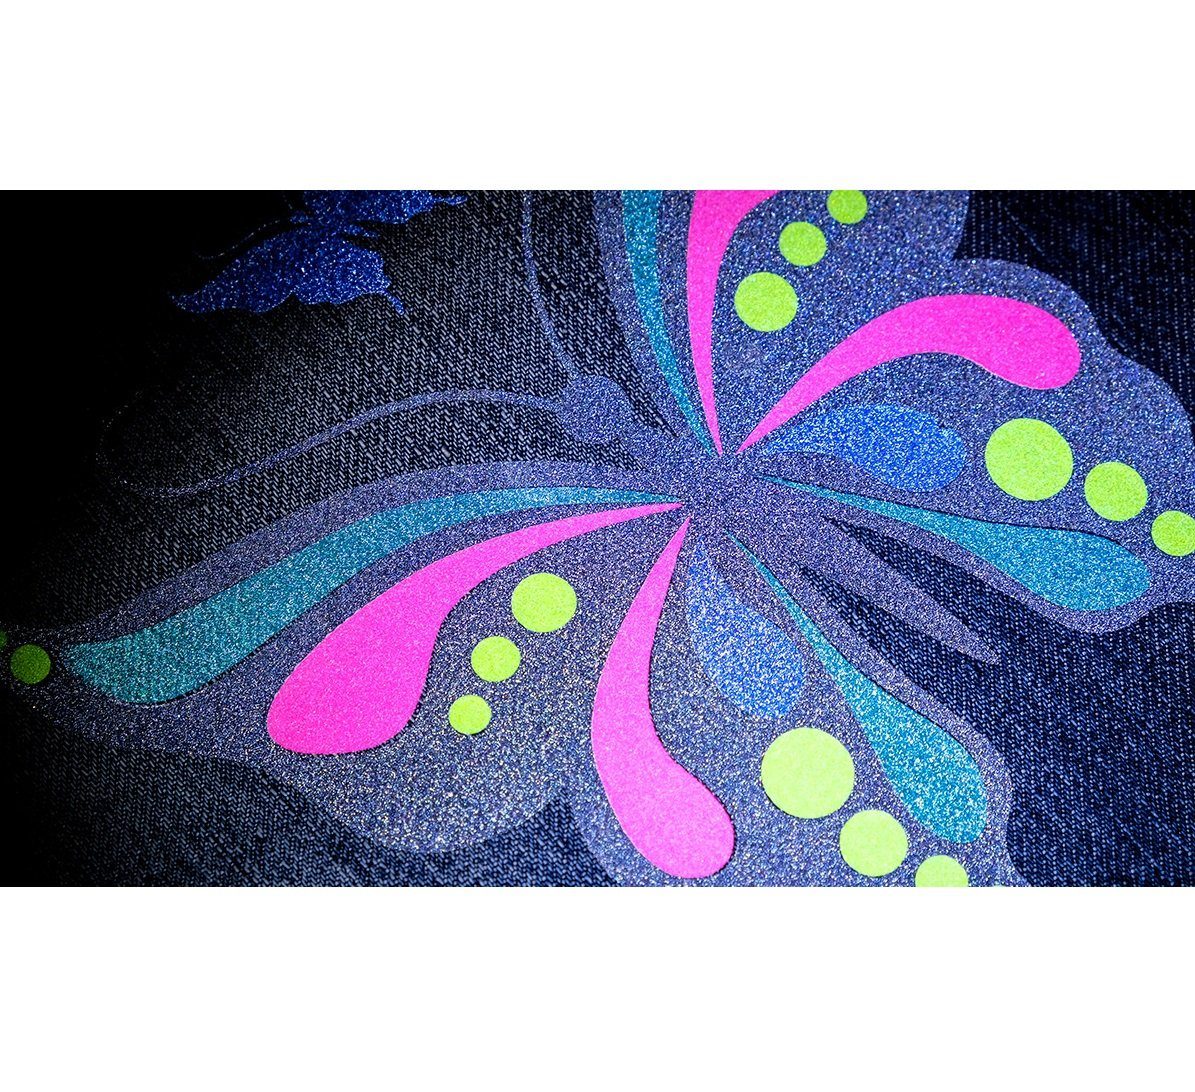 Hilltop Transparentpapier Reflektierende Transferfolie, Reflective Textilfolie, Multicolor 30x20 mehrfarbig, cm